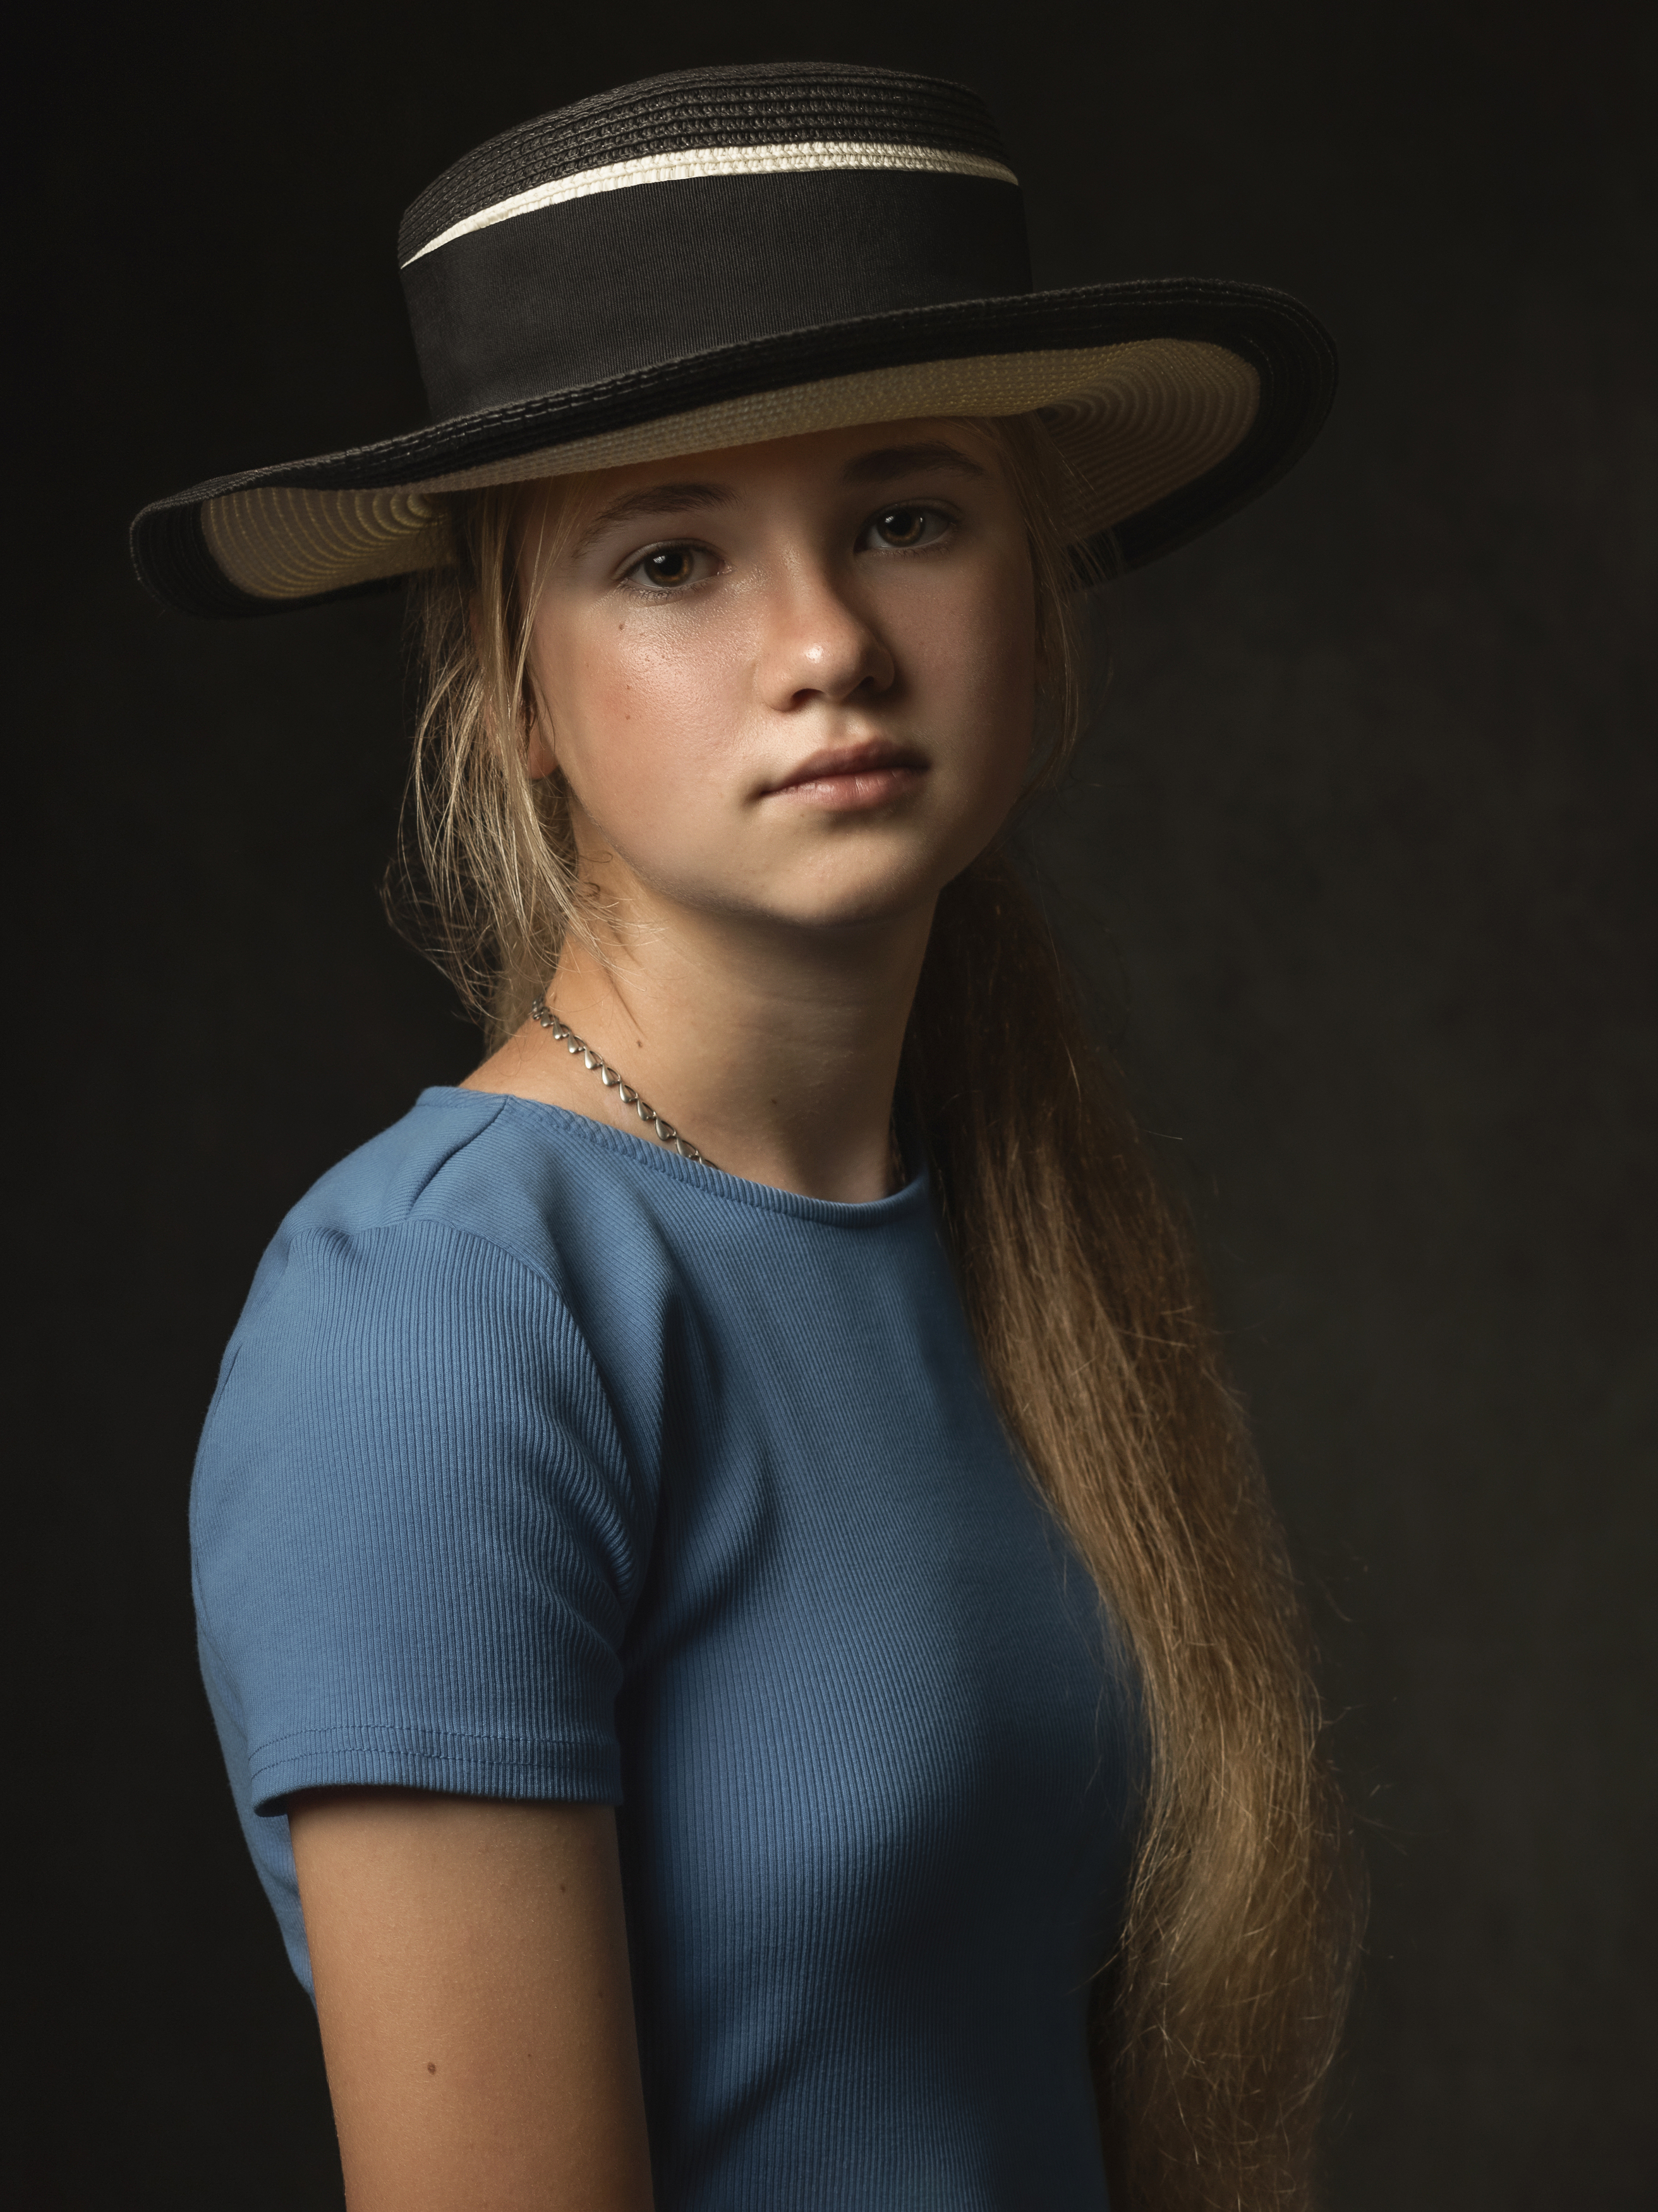 портрет, девушка, шляпа, взгляд, детский портрет, portrait, sight, girl portrait, hat, Aleksey Sologubov